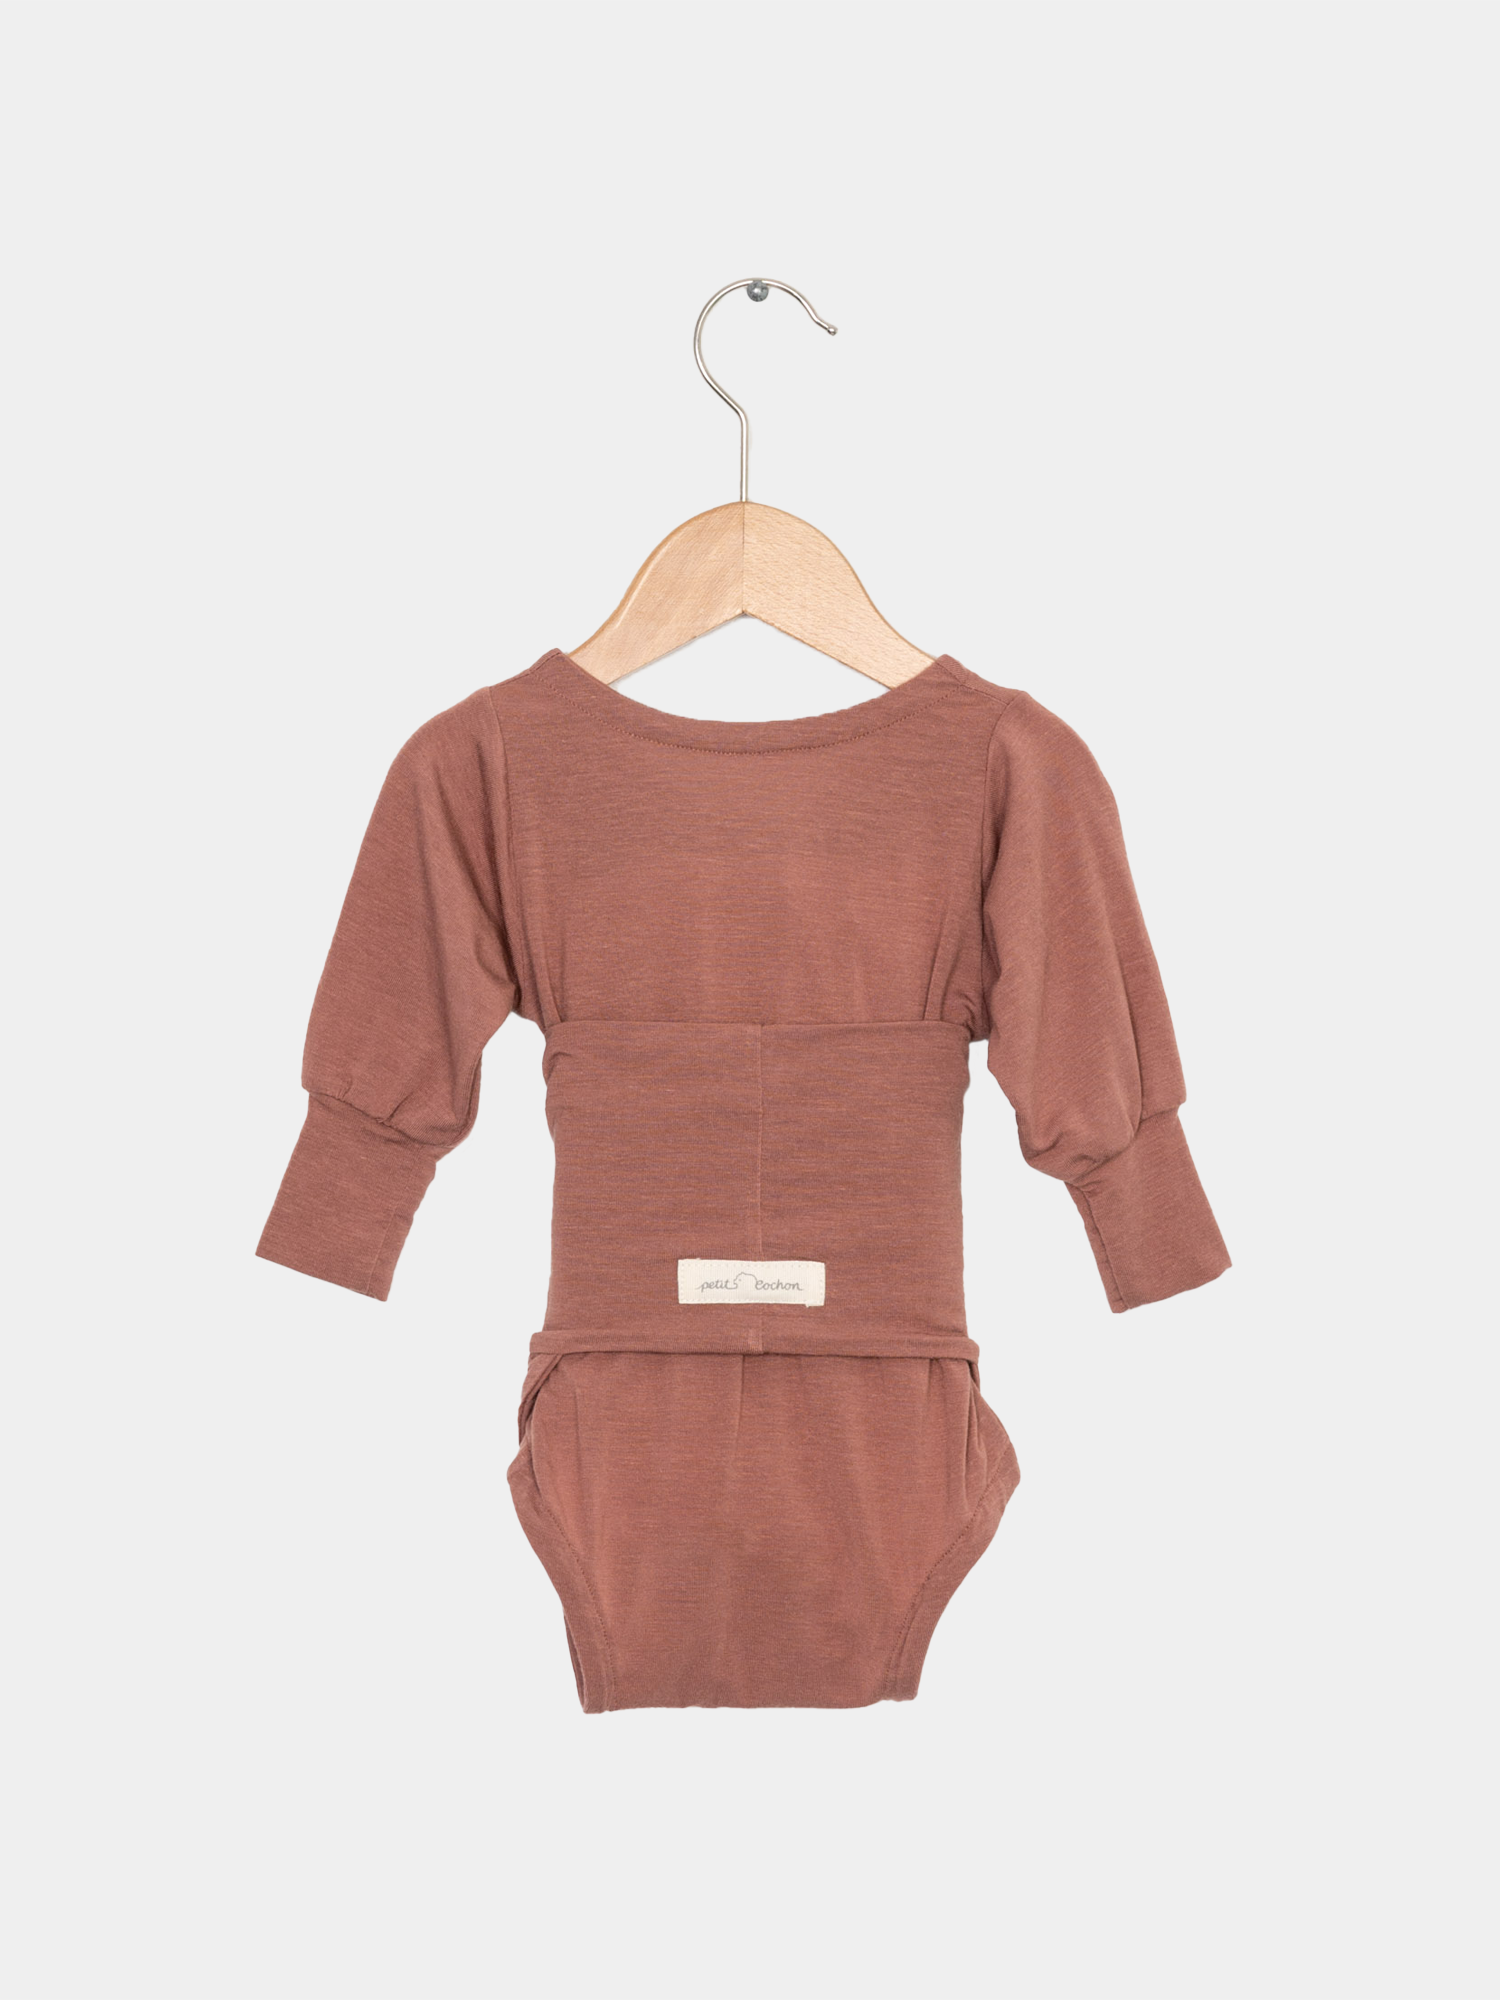 Loopbody cashmere blend - growing baby bodysuit - cinnamon